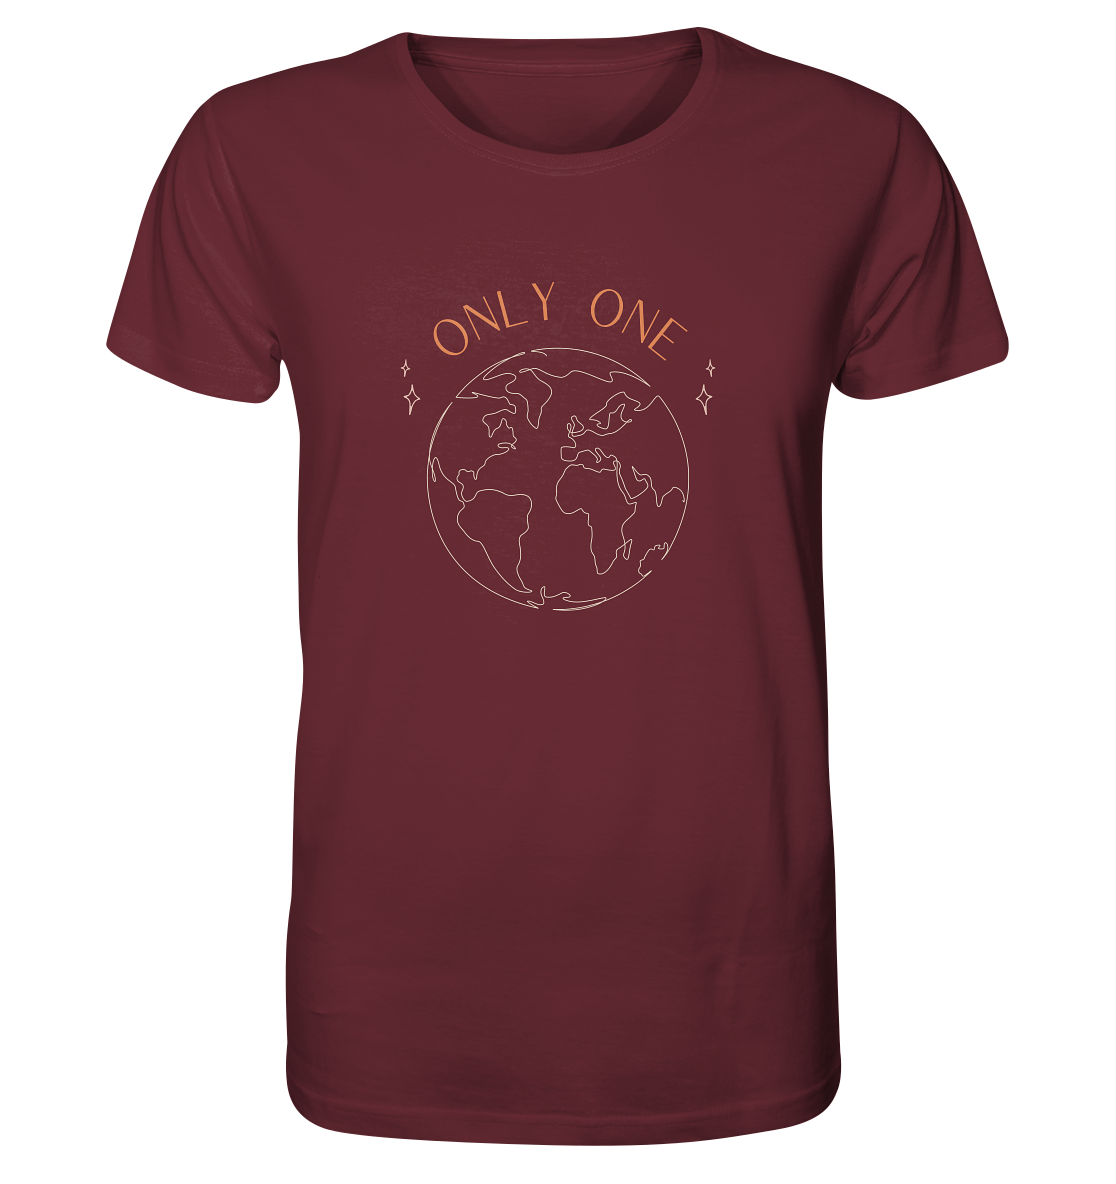 Organic vegan t-shirt saying only one earth on burgundy 100% organic ringspun combed cotton